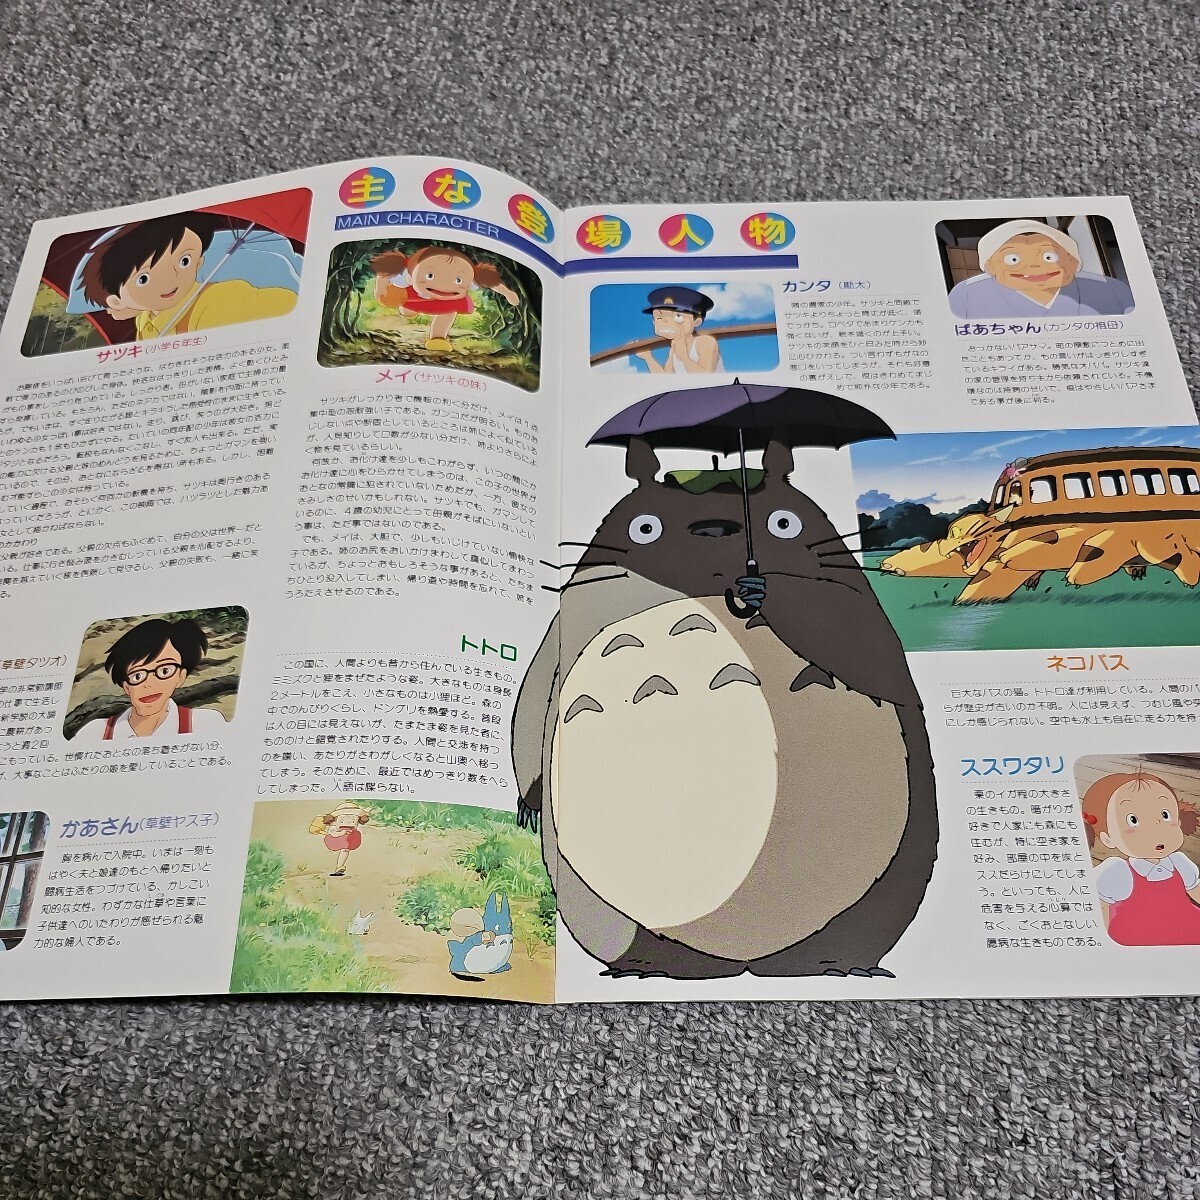  фильм проспект [ Tonari no Totoro ] Studio Ghibli Miyazaki .